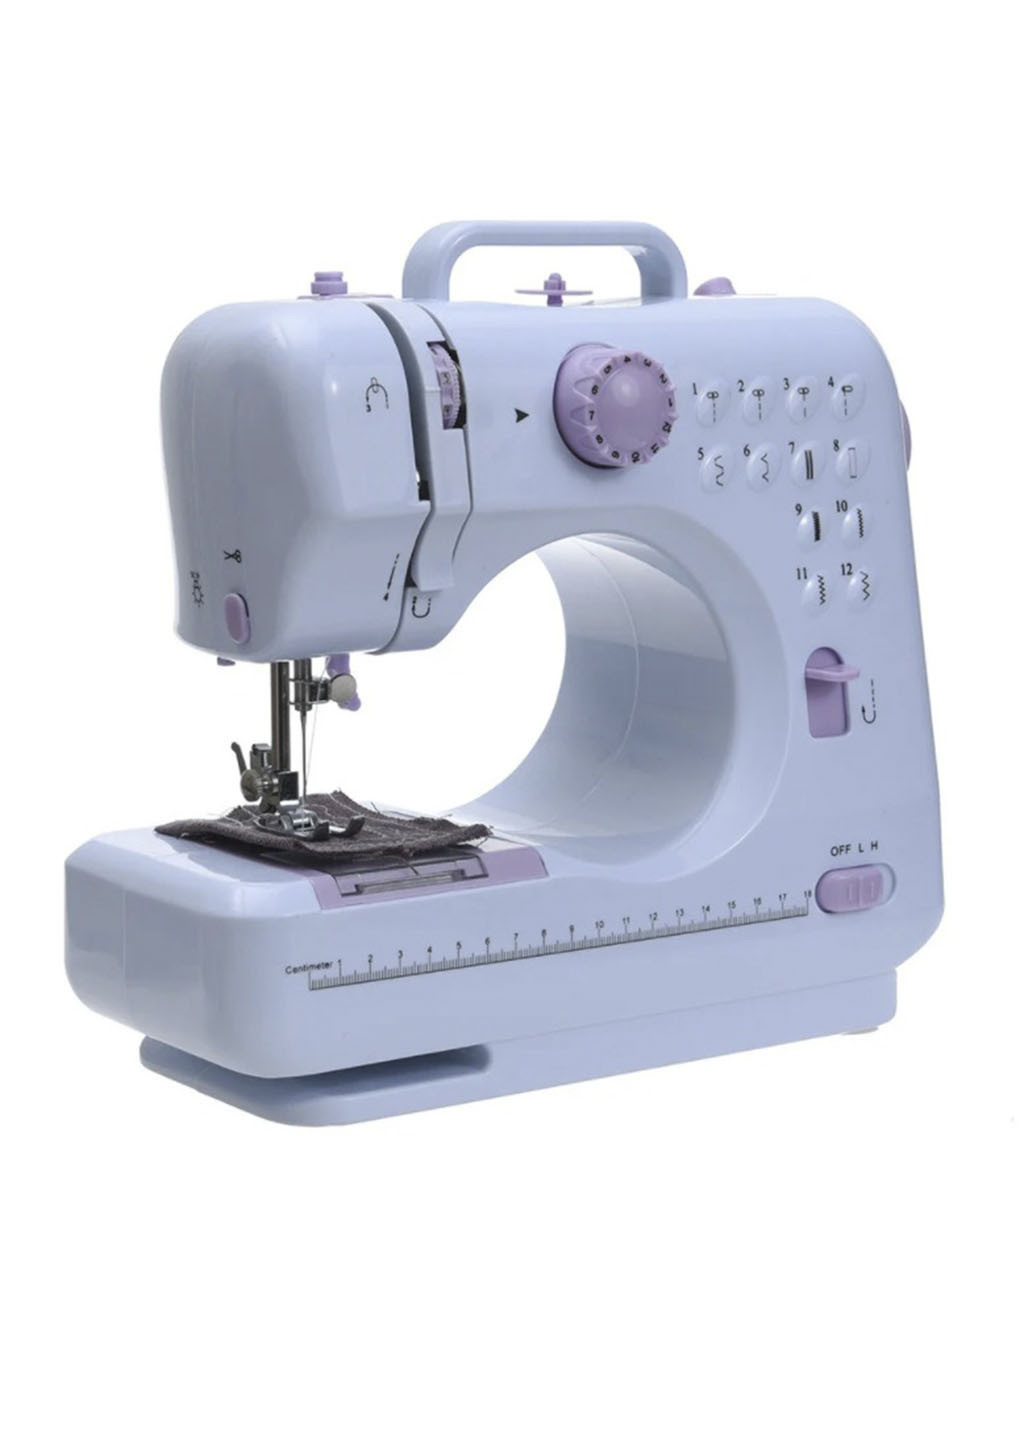 Швейная машинка Michley Sewing Machine YASM-505A Pro 12 типов строчки XO (253326808)